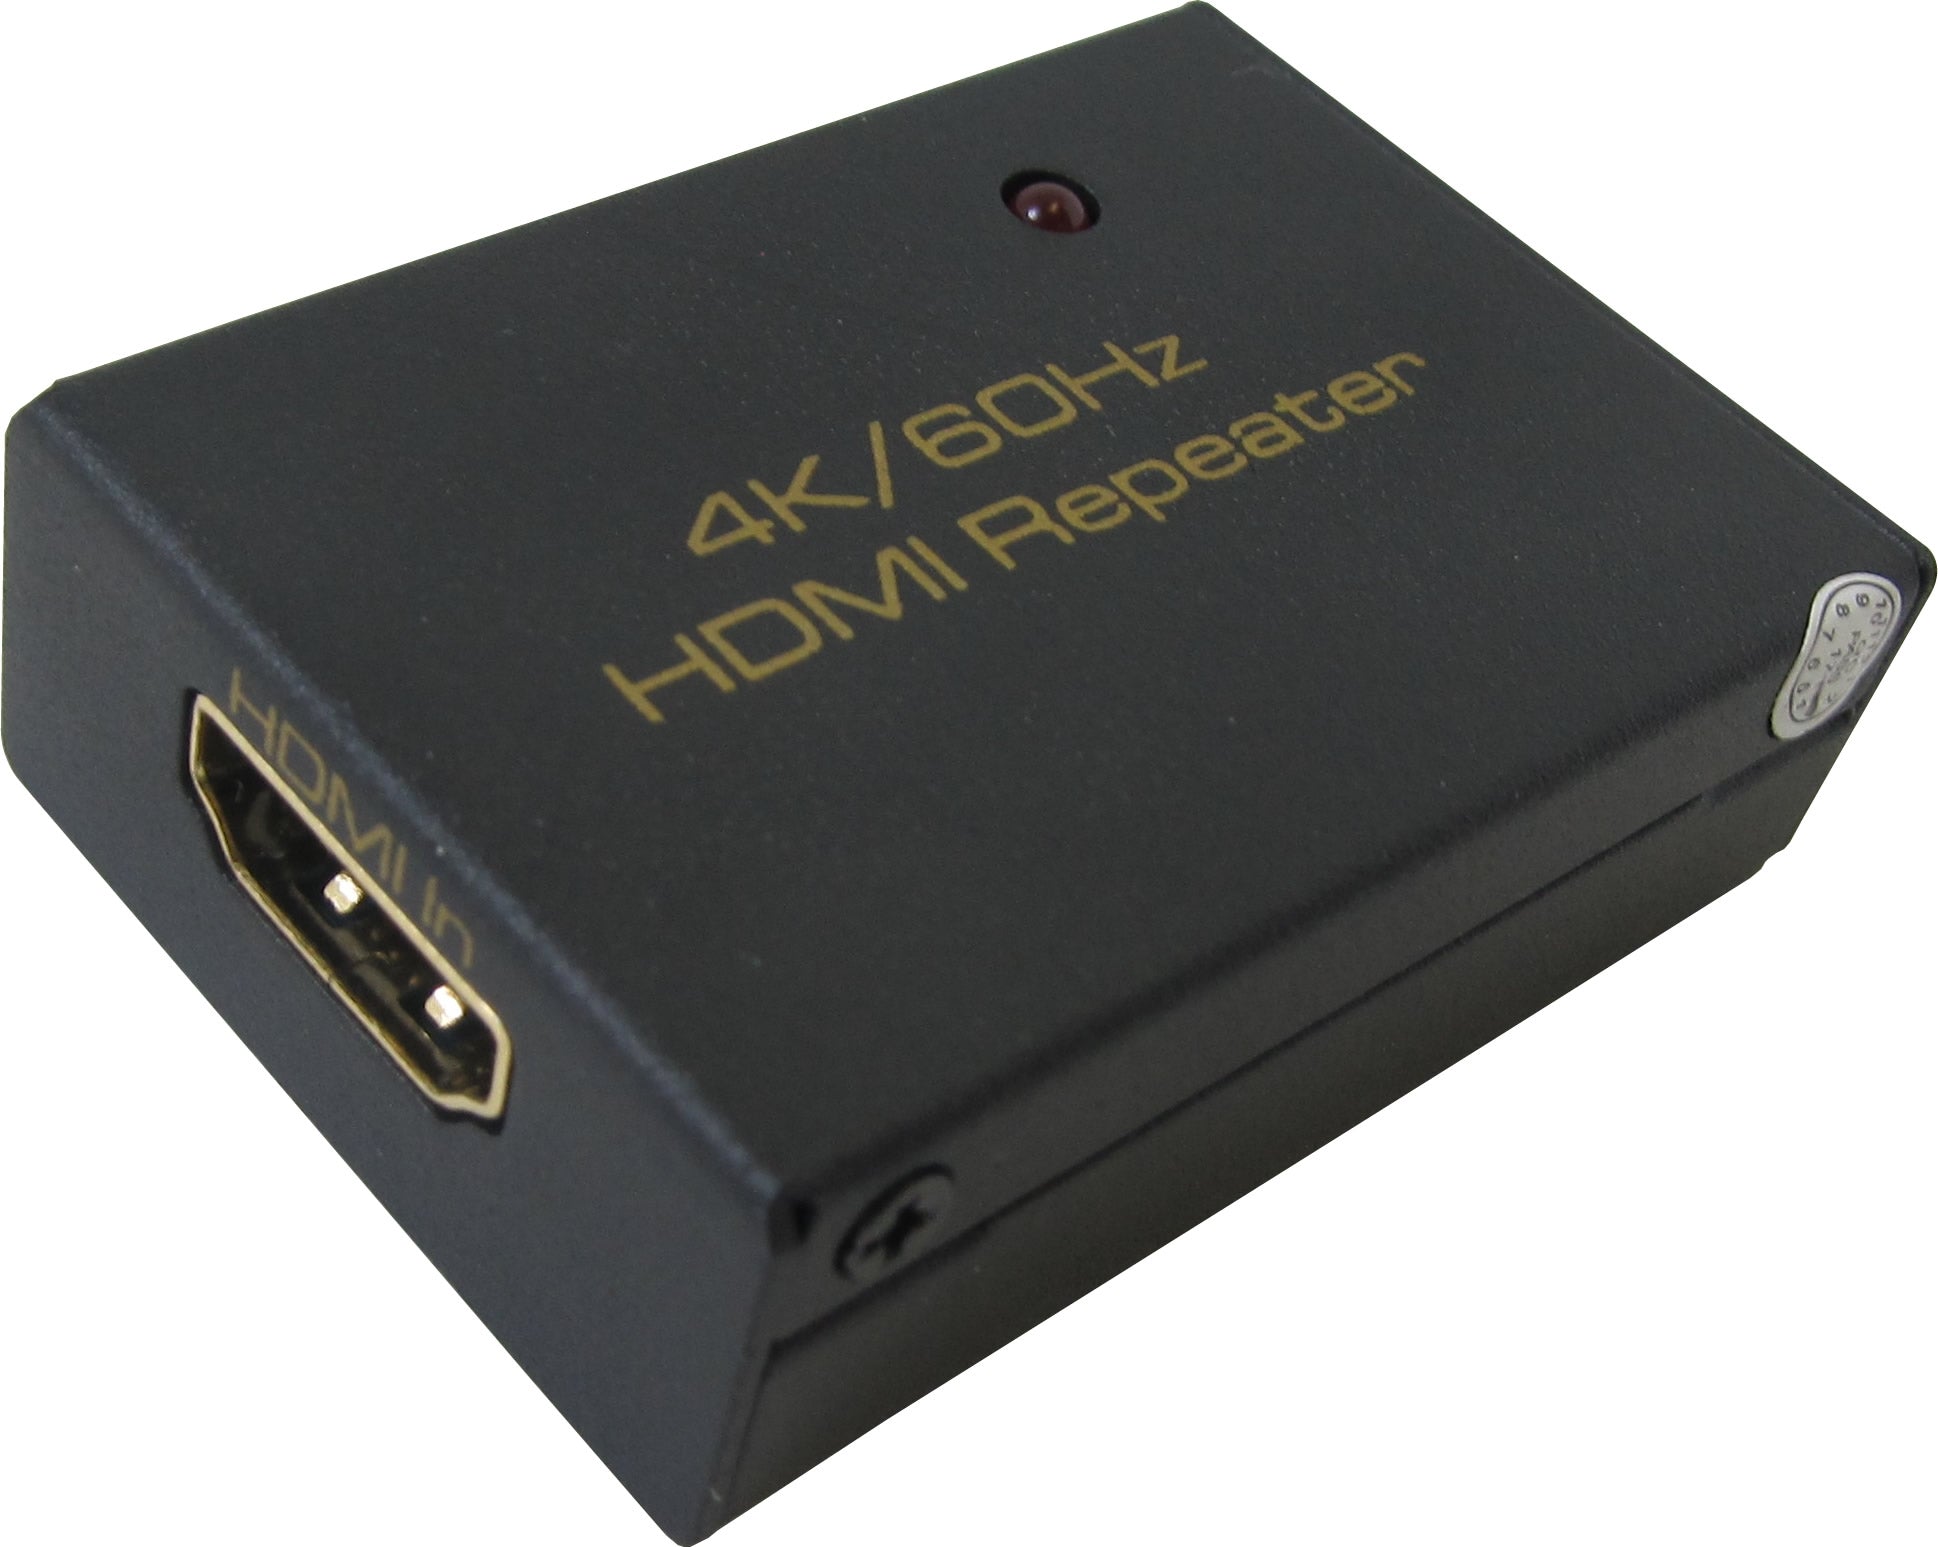 16-6382-04 HDMI Version 2.0 4K Repeater 30M